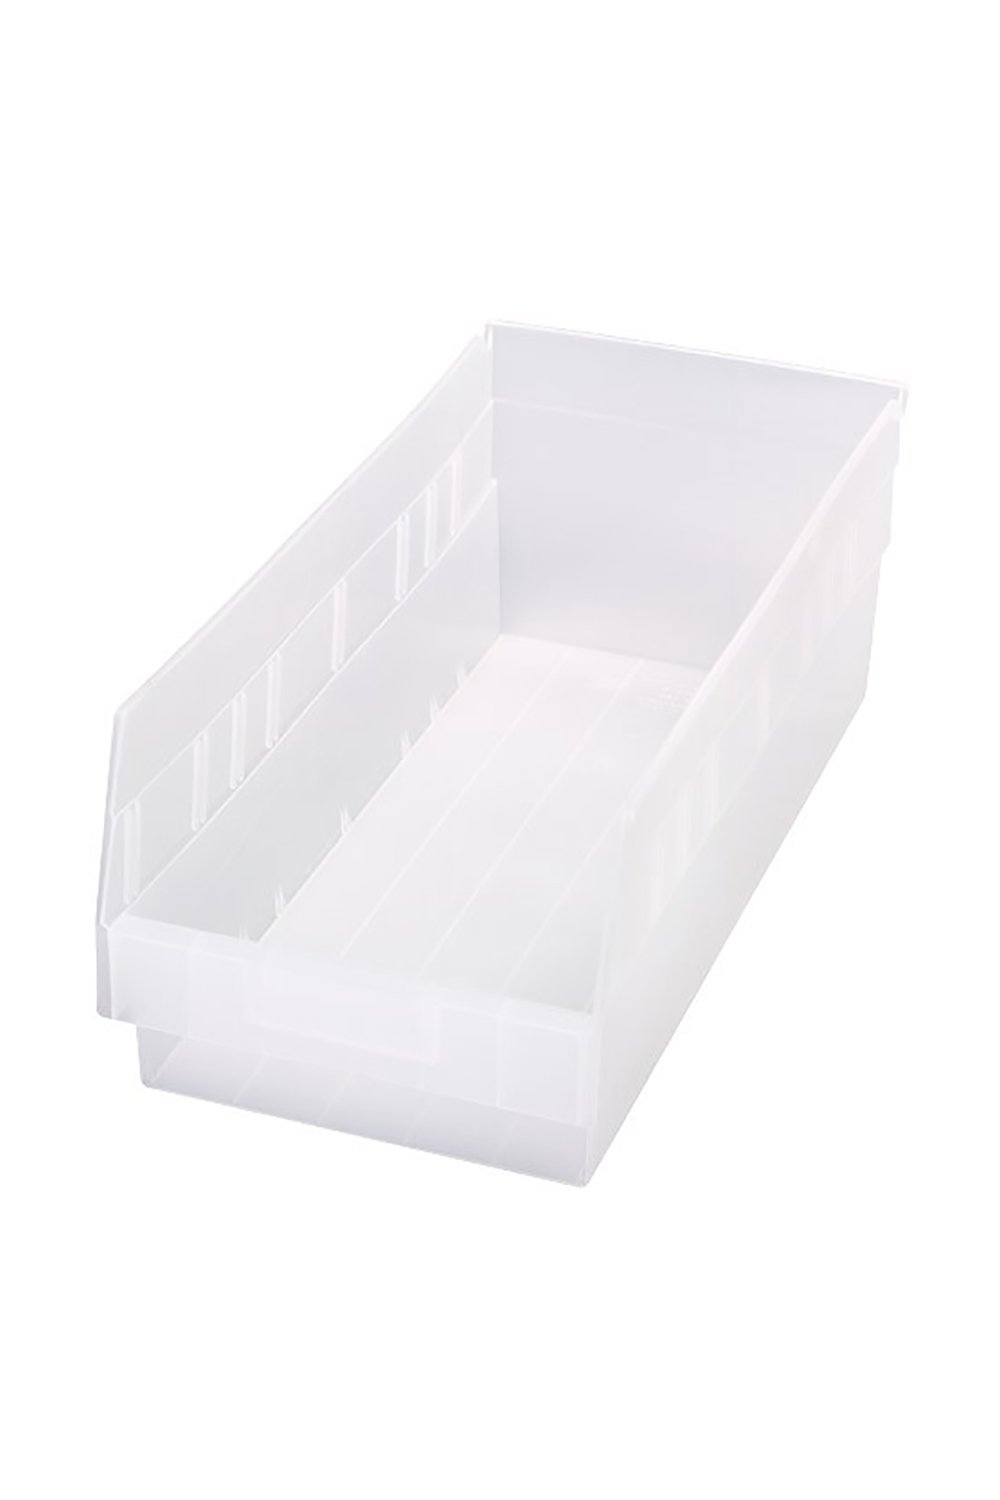 Shelf Bin for 24"D Shelves Bins & Containers Acart 17-7/8" x 8-3/8" x 6" Clear 